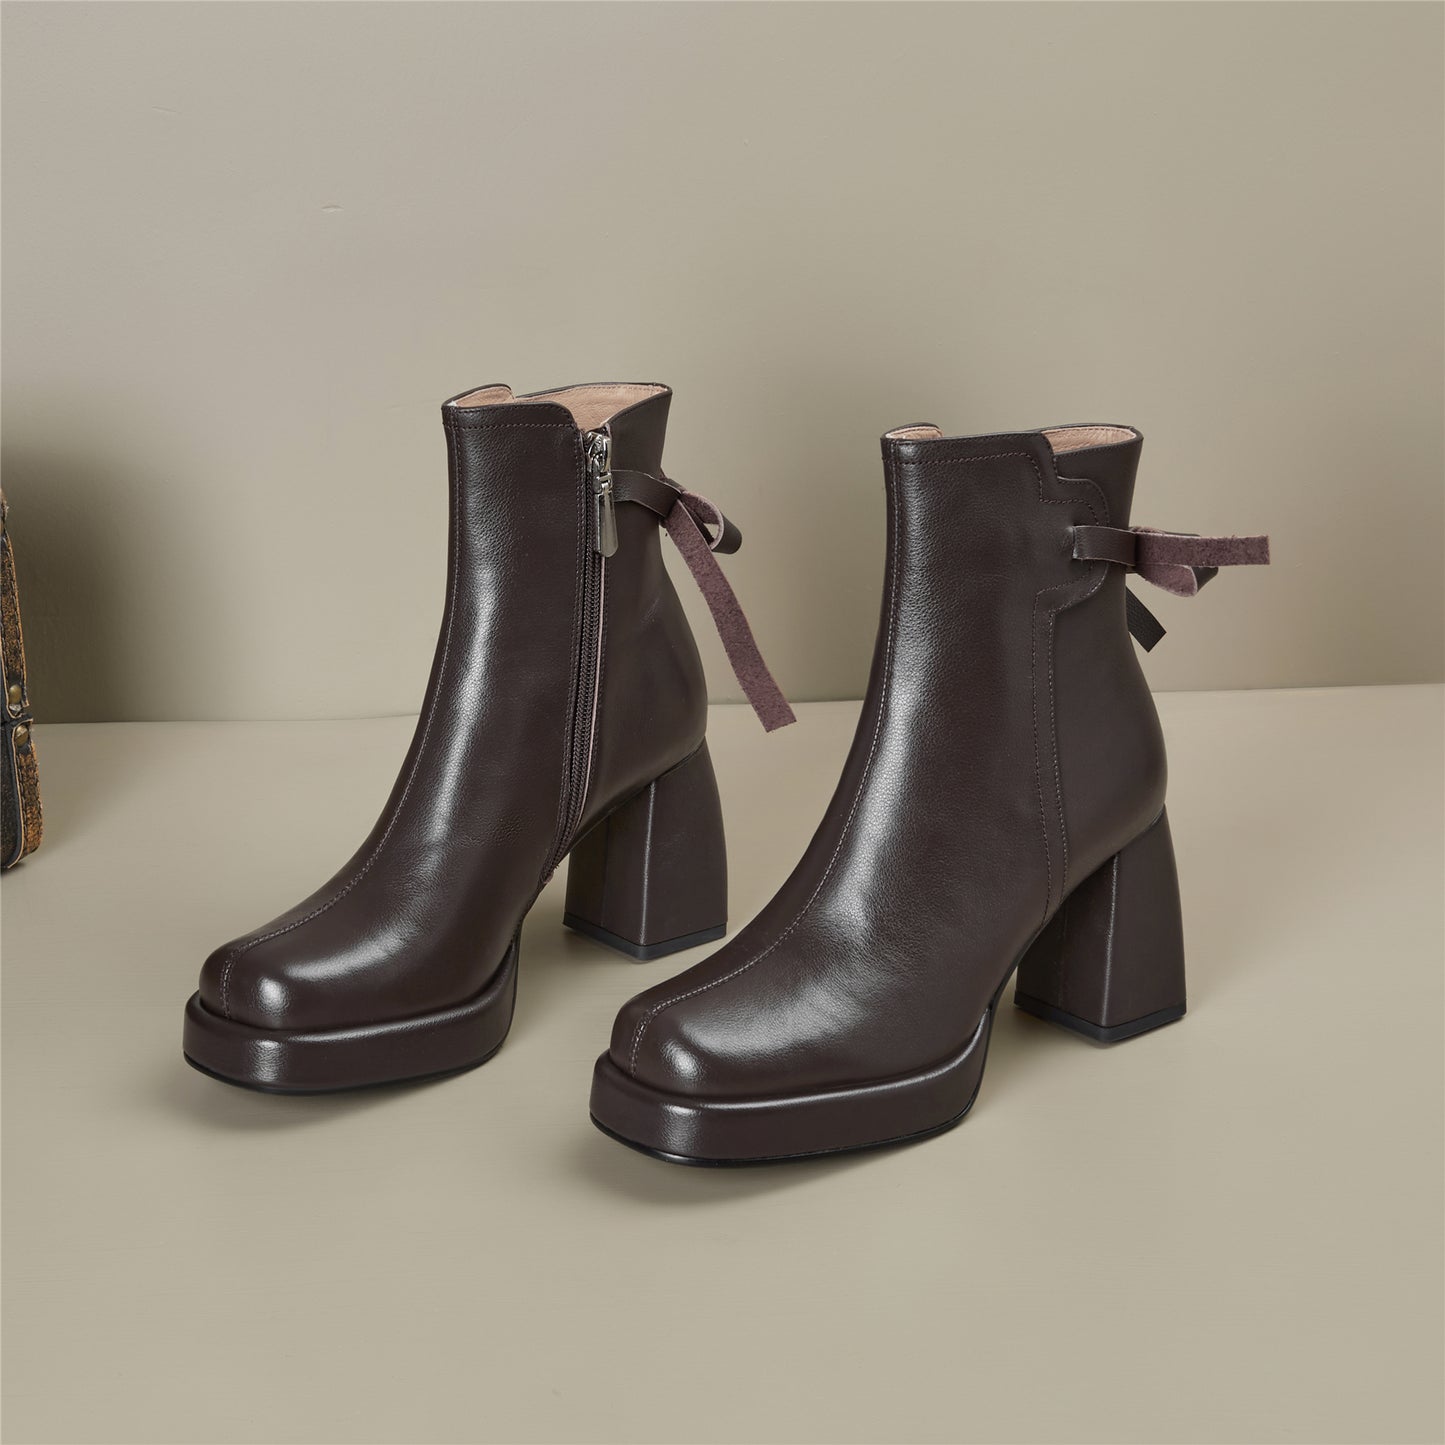 TinaCus Women's Genuine Leather High Heel Handmade Side Zip Platform Ankle Boots